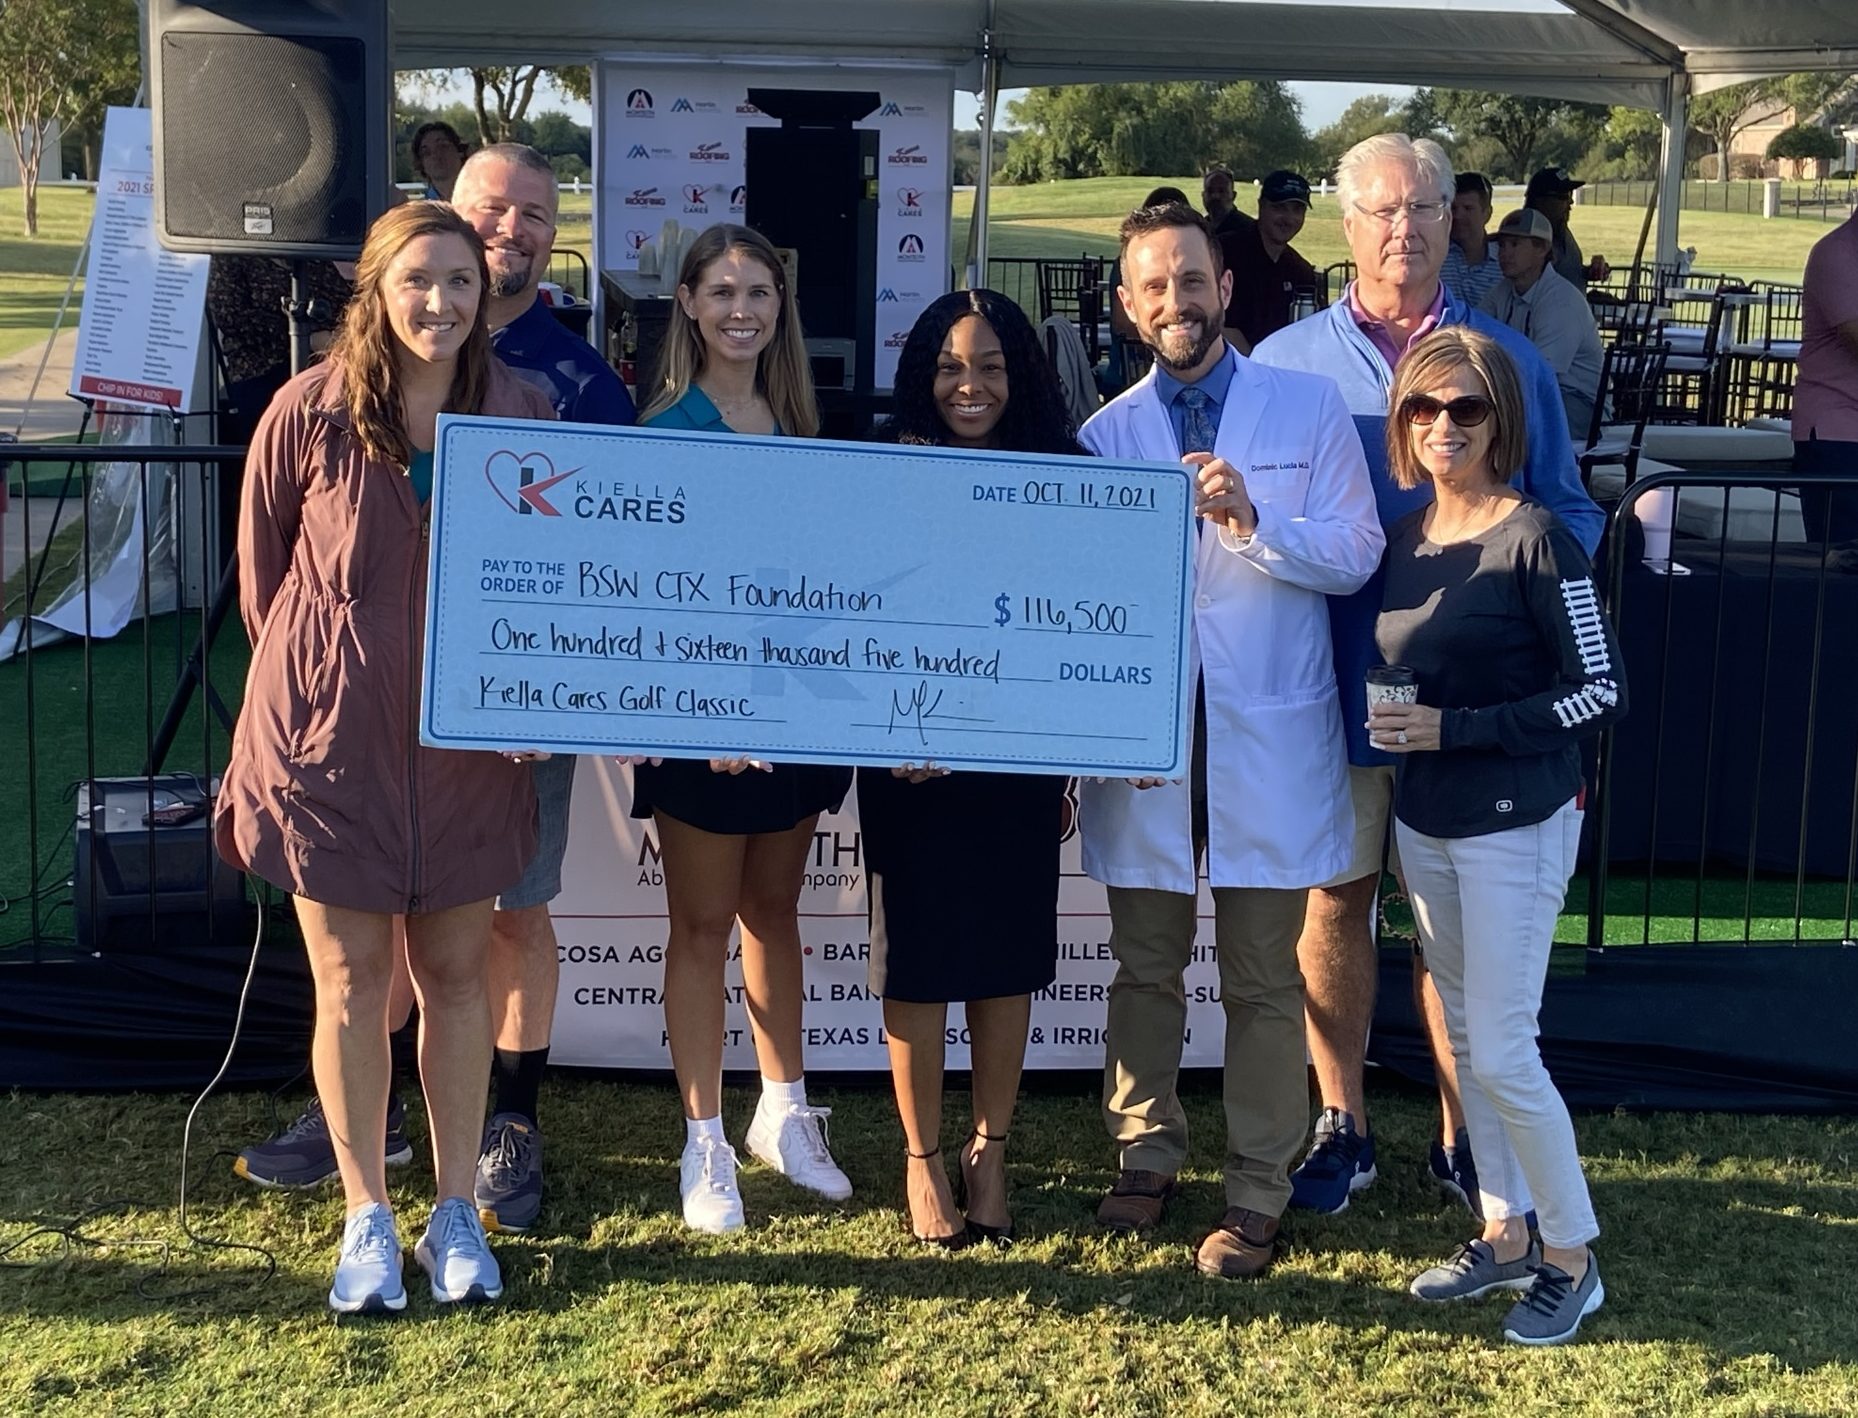 Kiella Cares Raises Over $115,000 for Baylor Scott & White McLane Children’s Medical Center